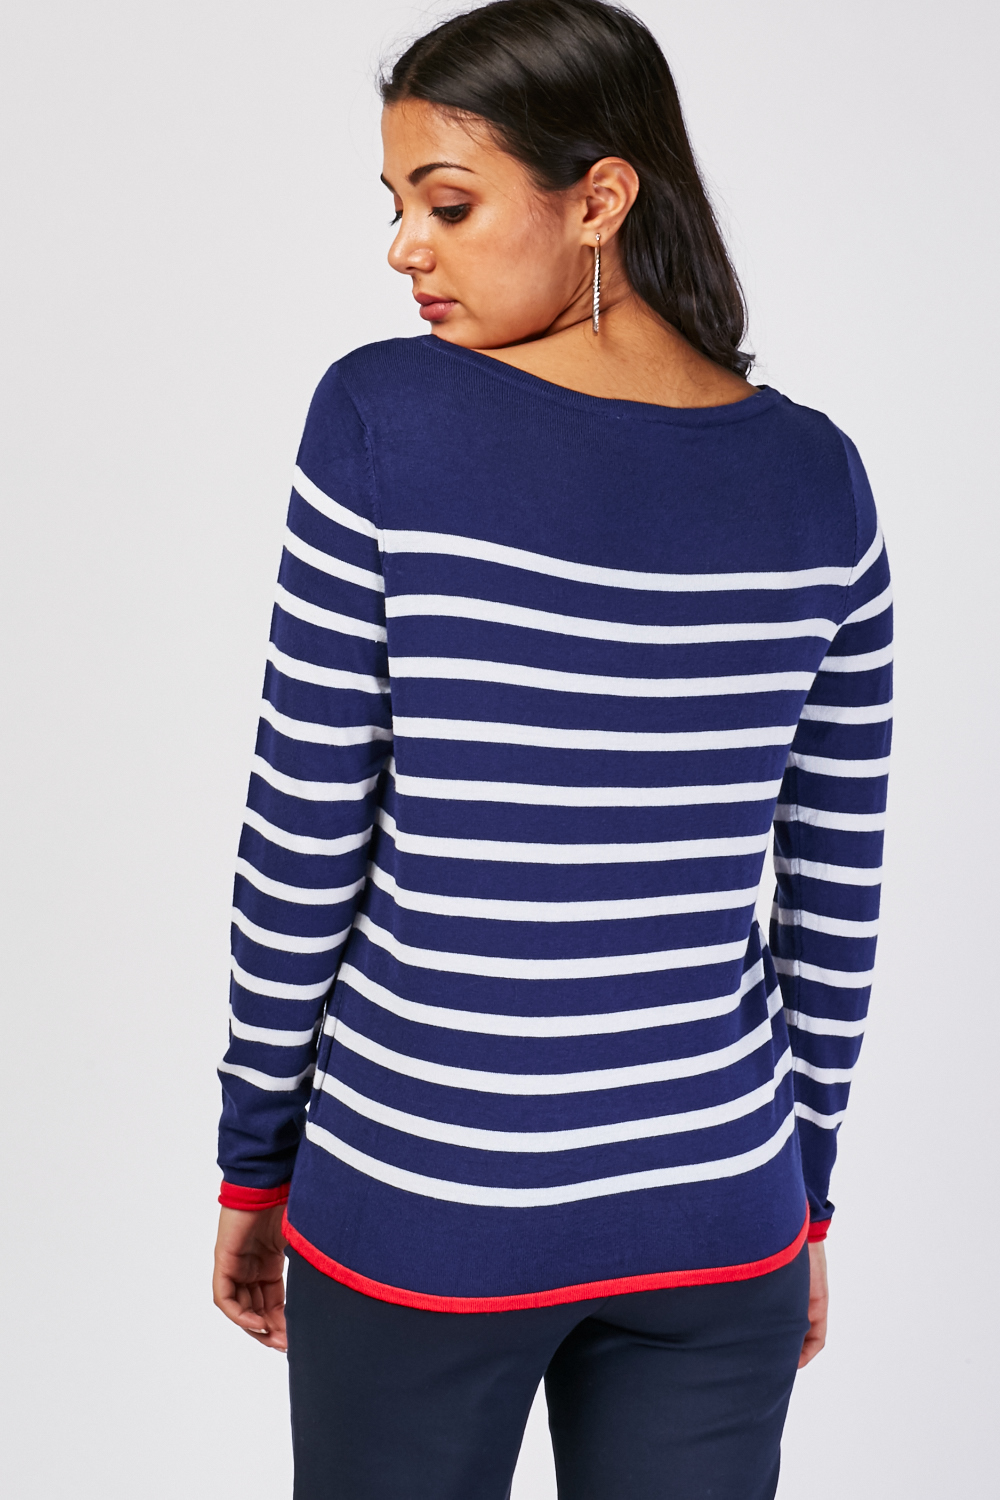 sweater striped